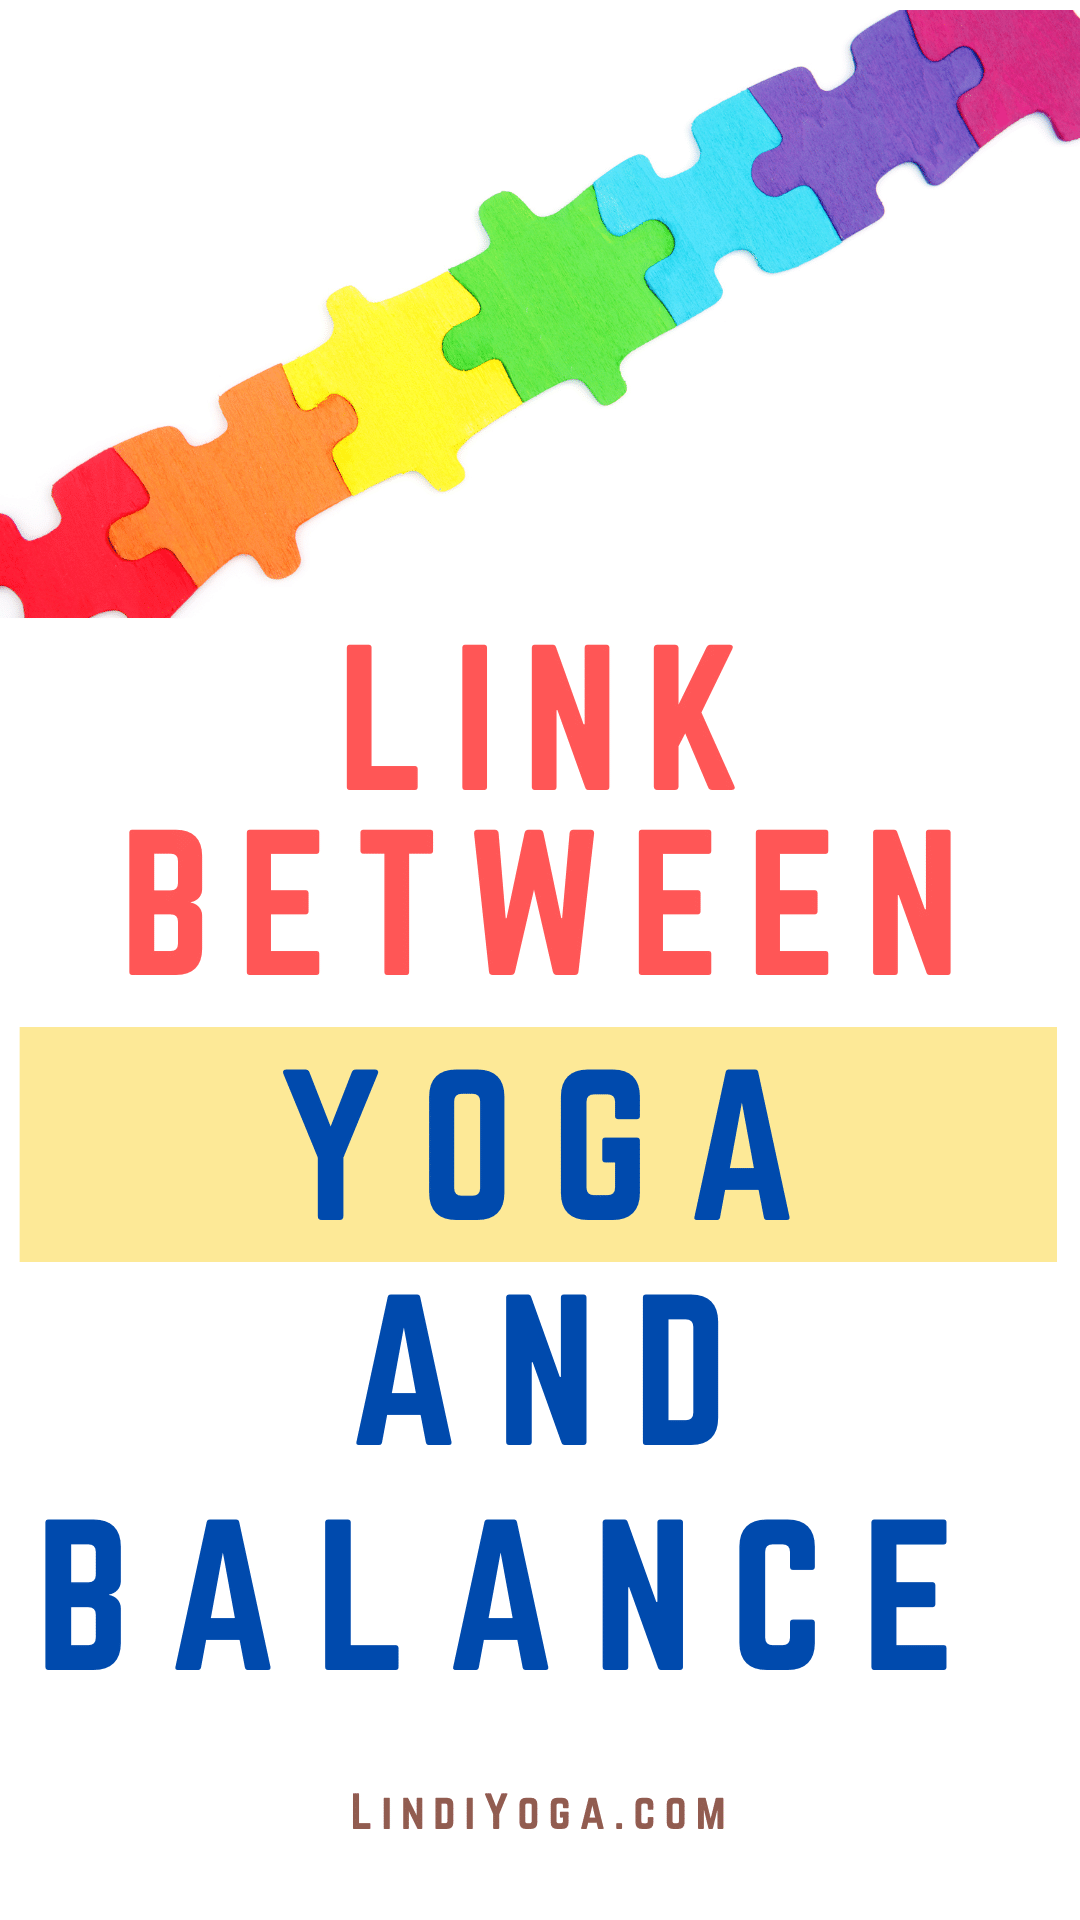 Link between Yoga Balance and Wellness / Canva